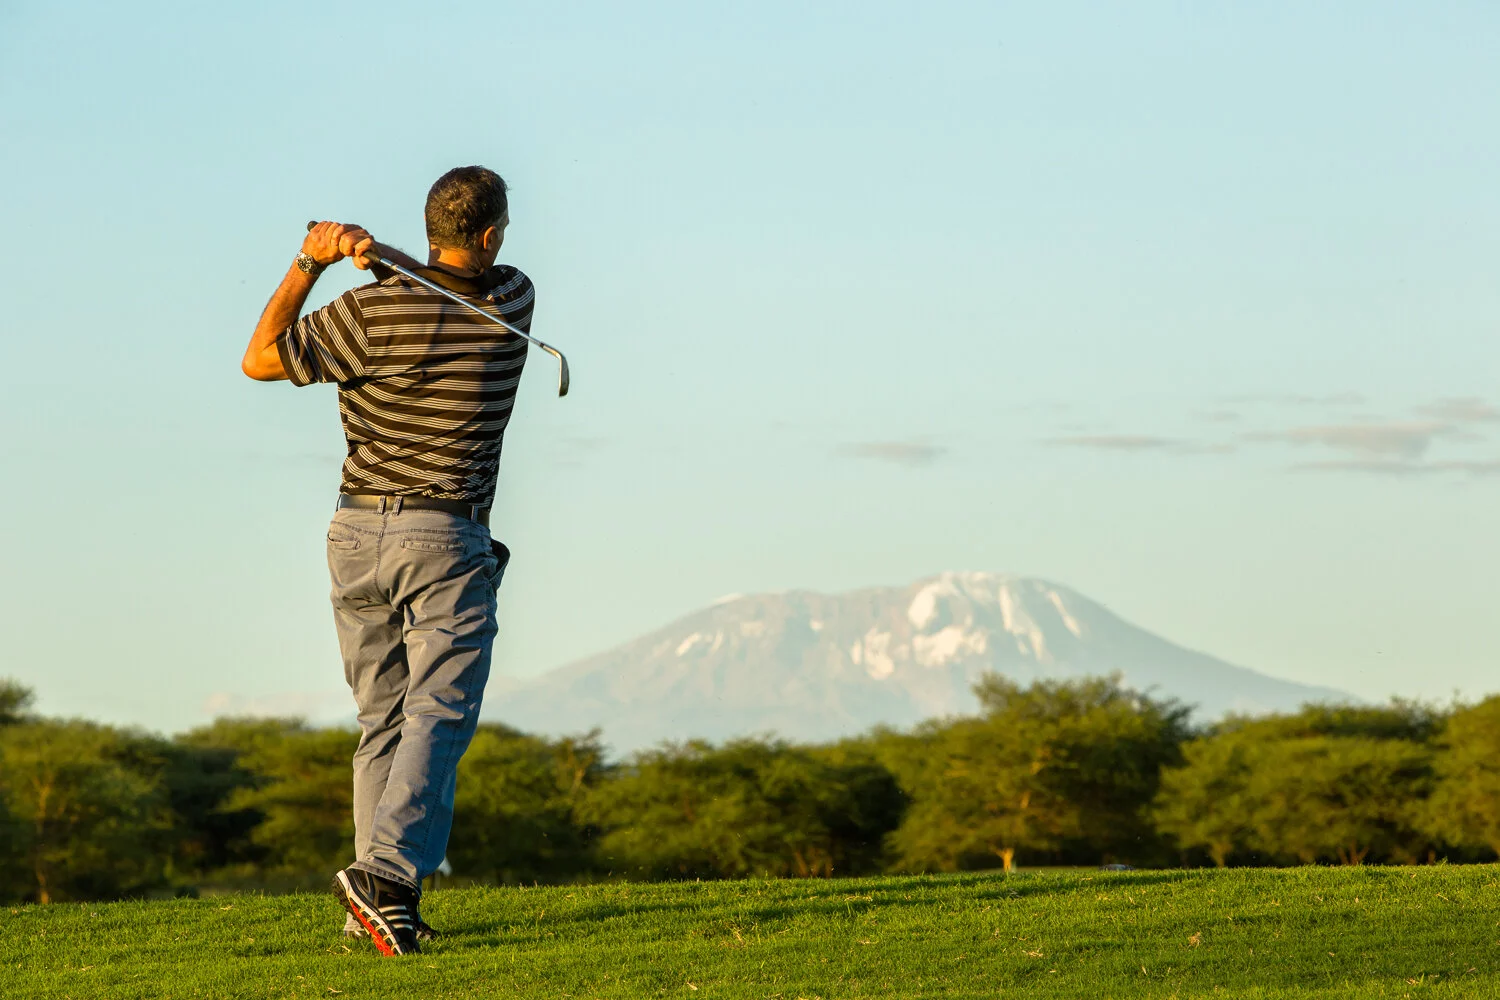 Mount Kilimanjaro view while golfing in USA River